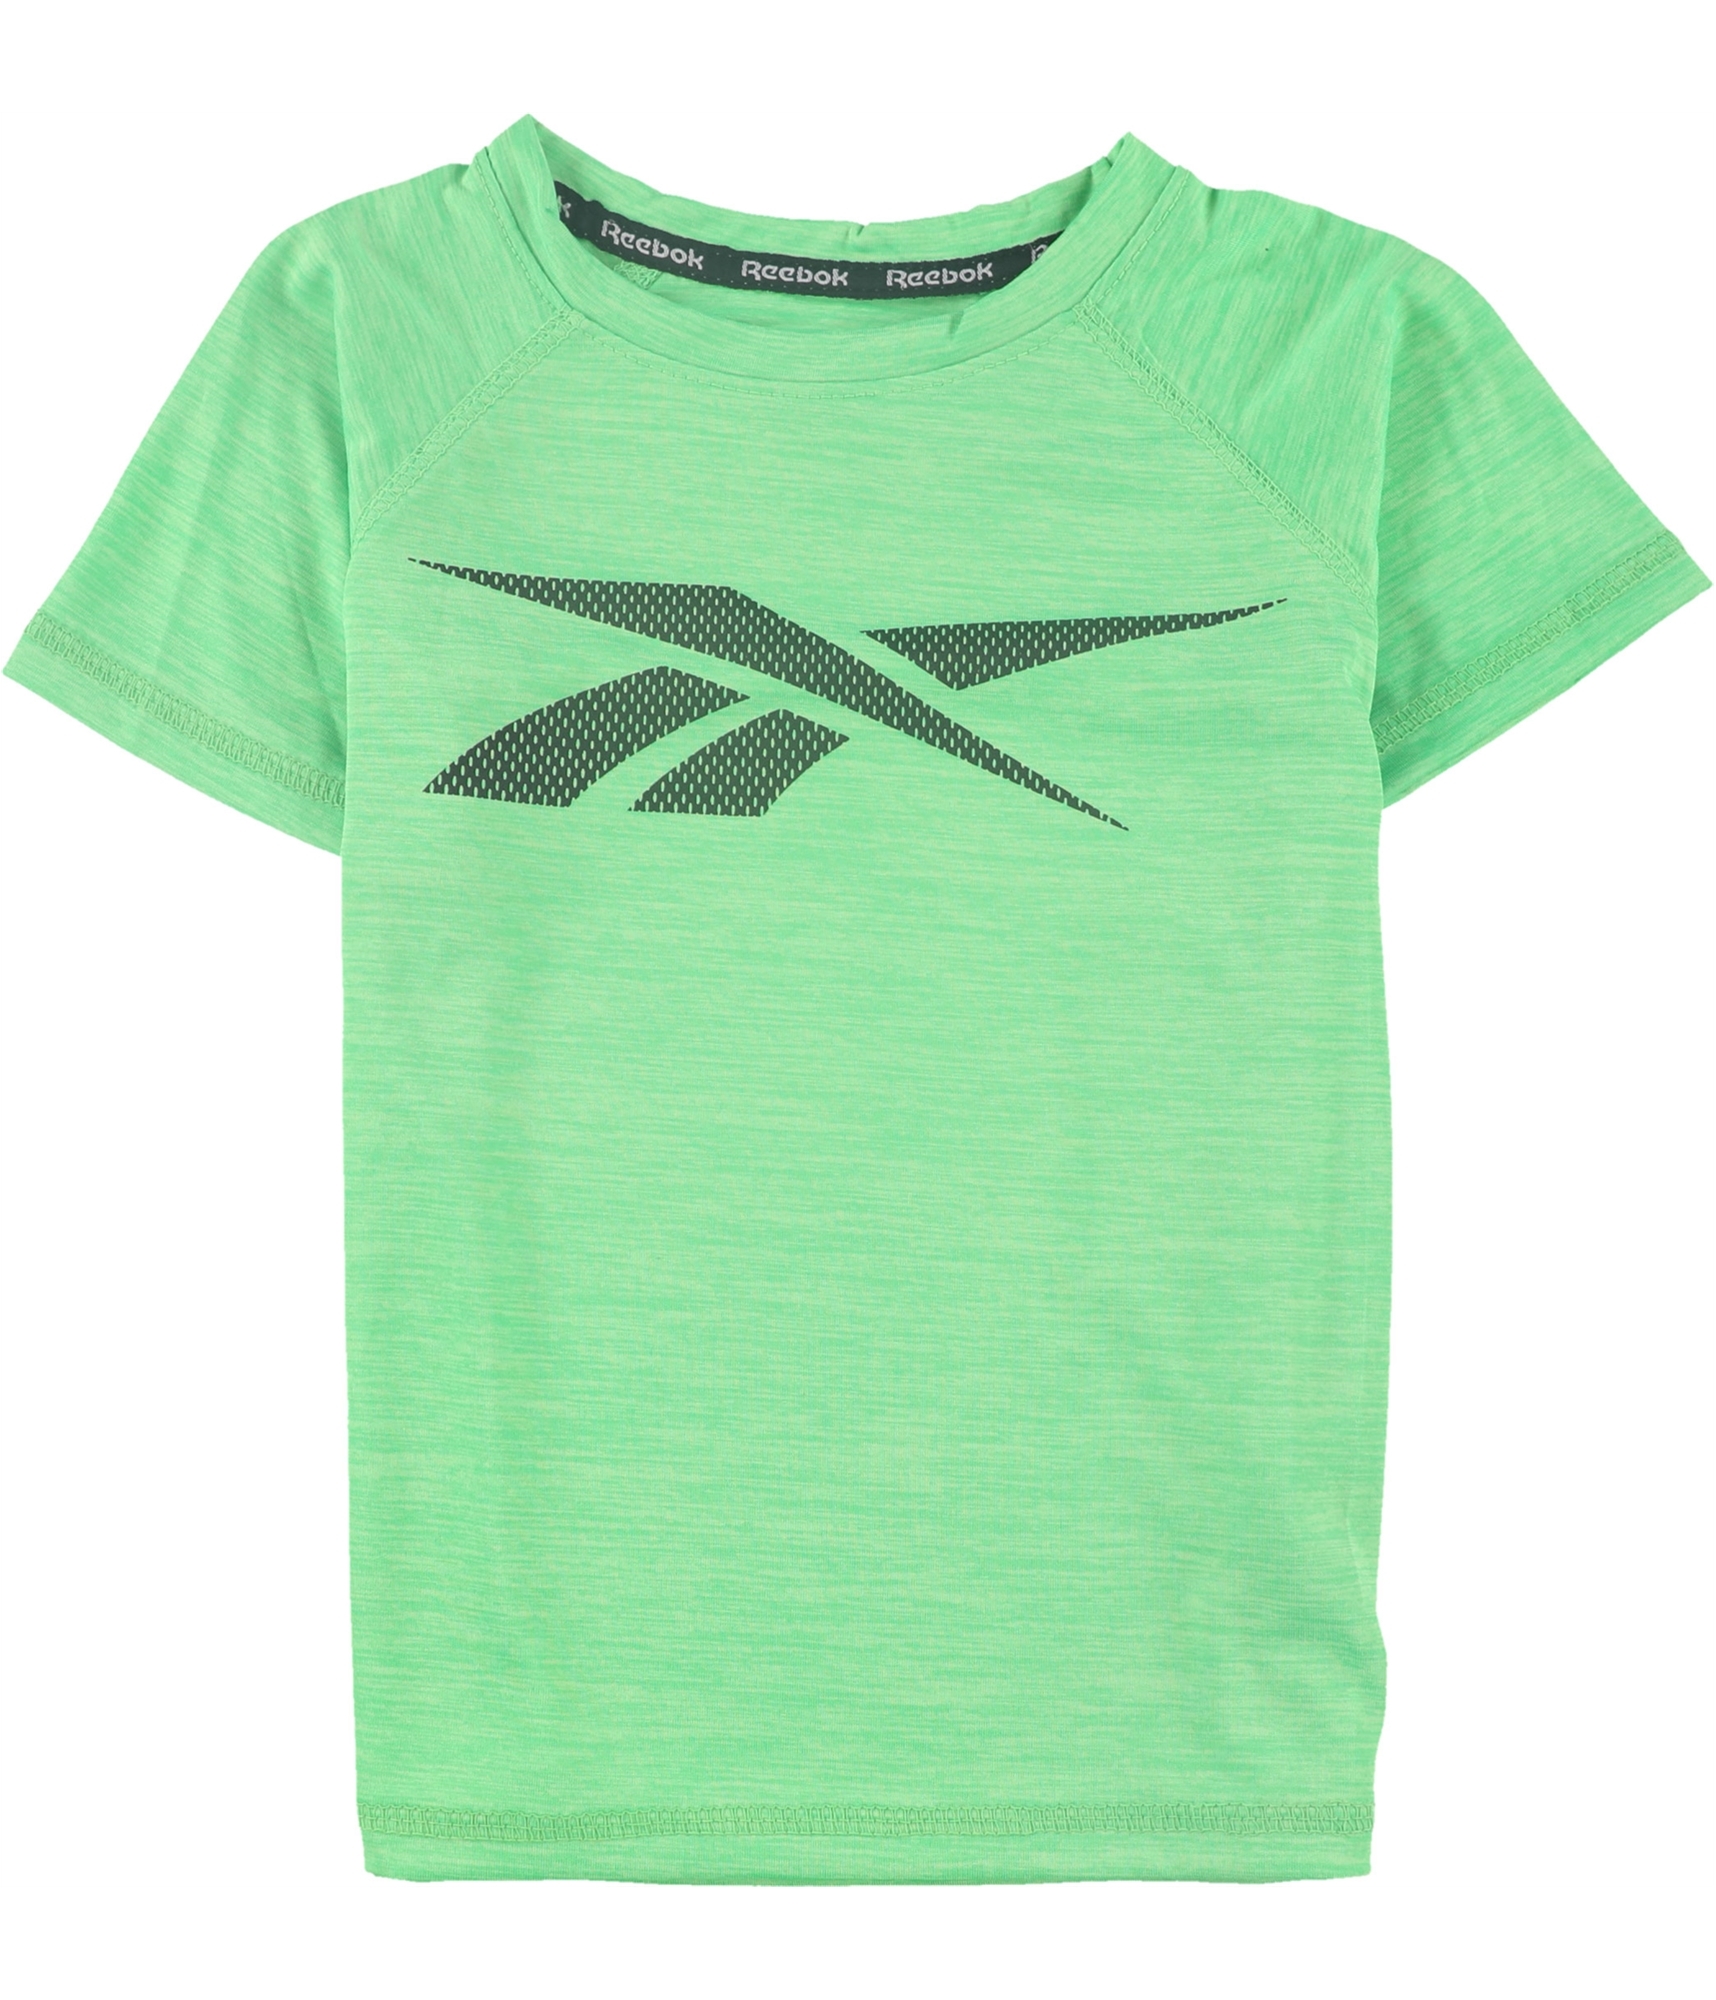 Buy a Boys Reebok Space Dye Graphic T-Shirt Online TagsWeekly.com